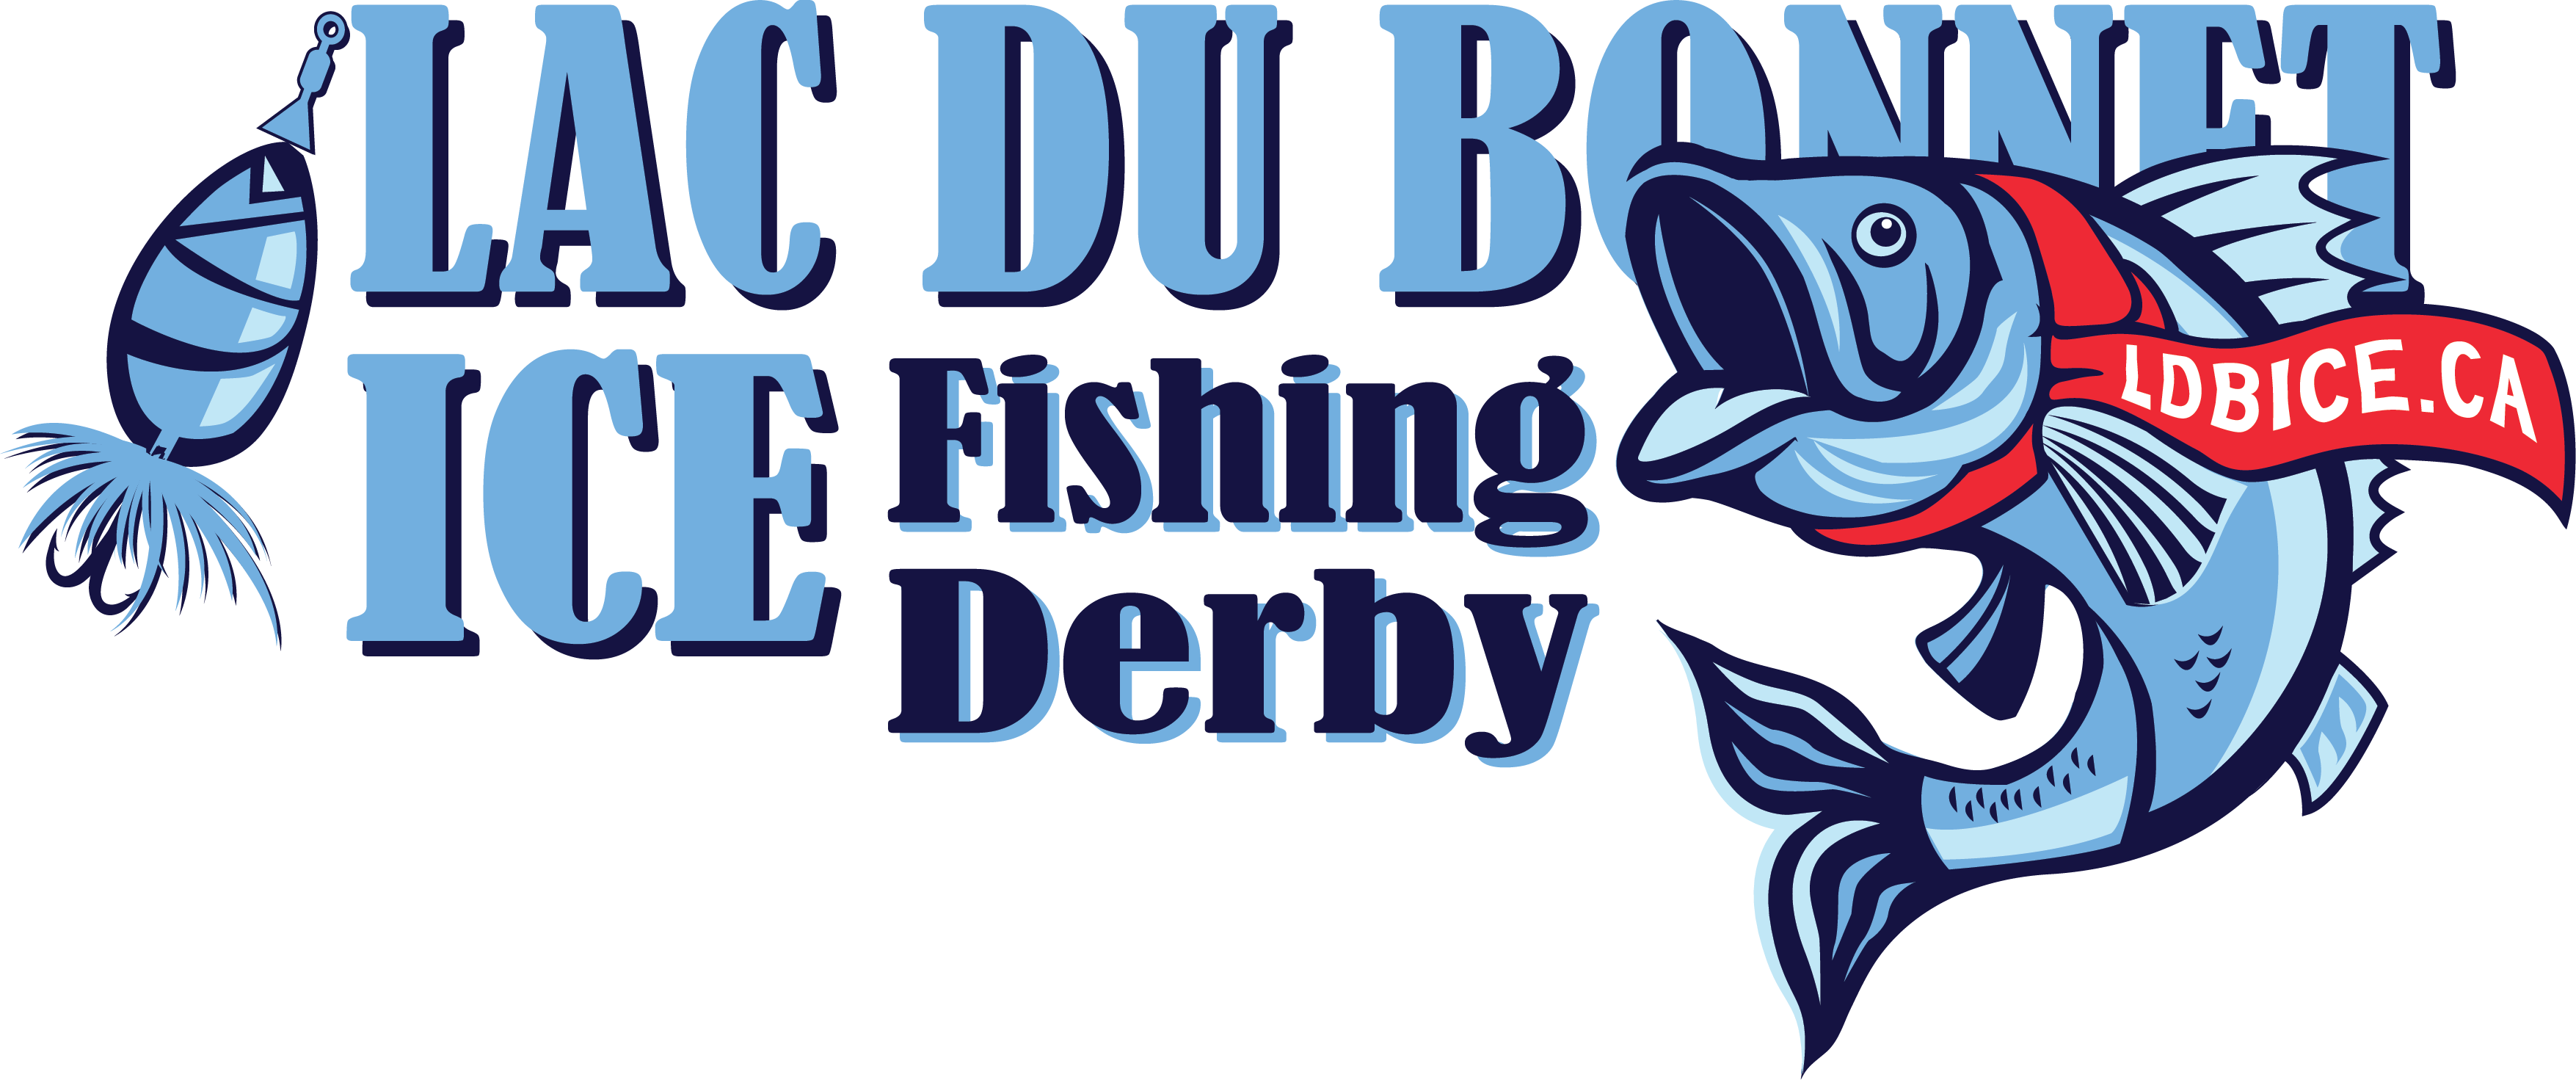 Lac du Bonnet Ice Fishing Derby Logo